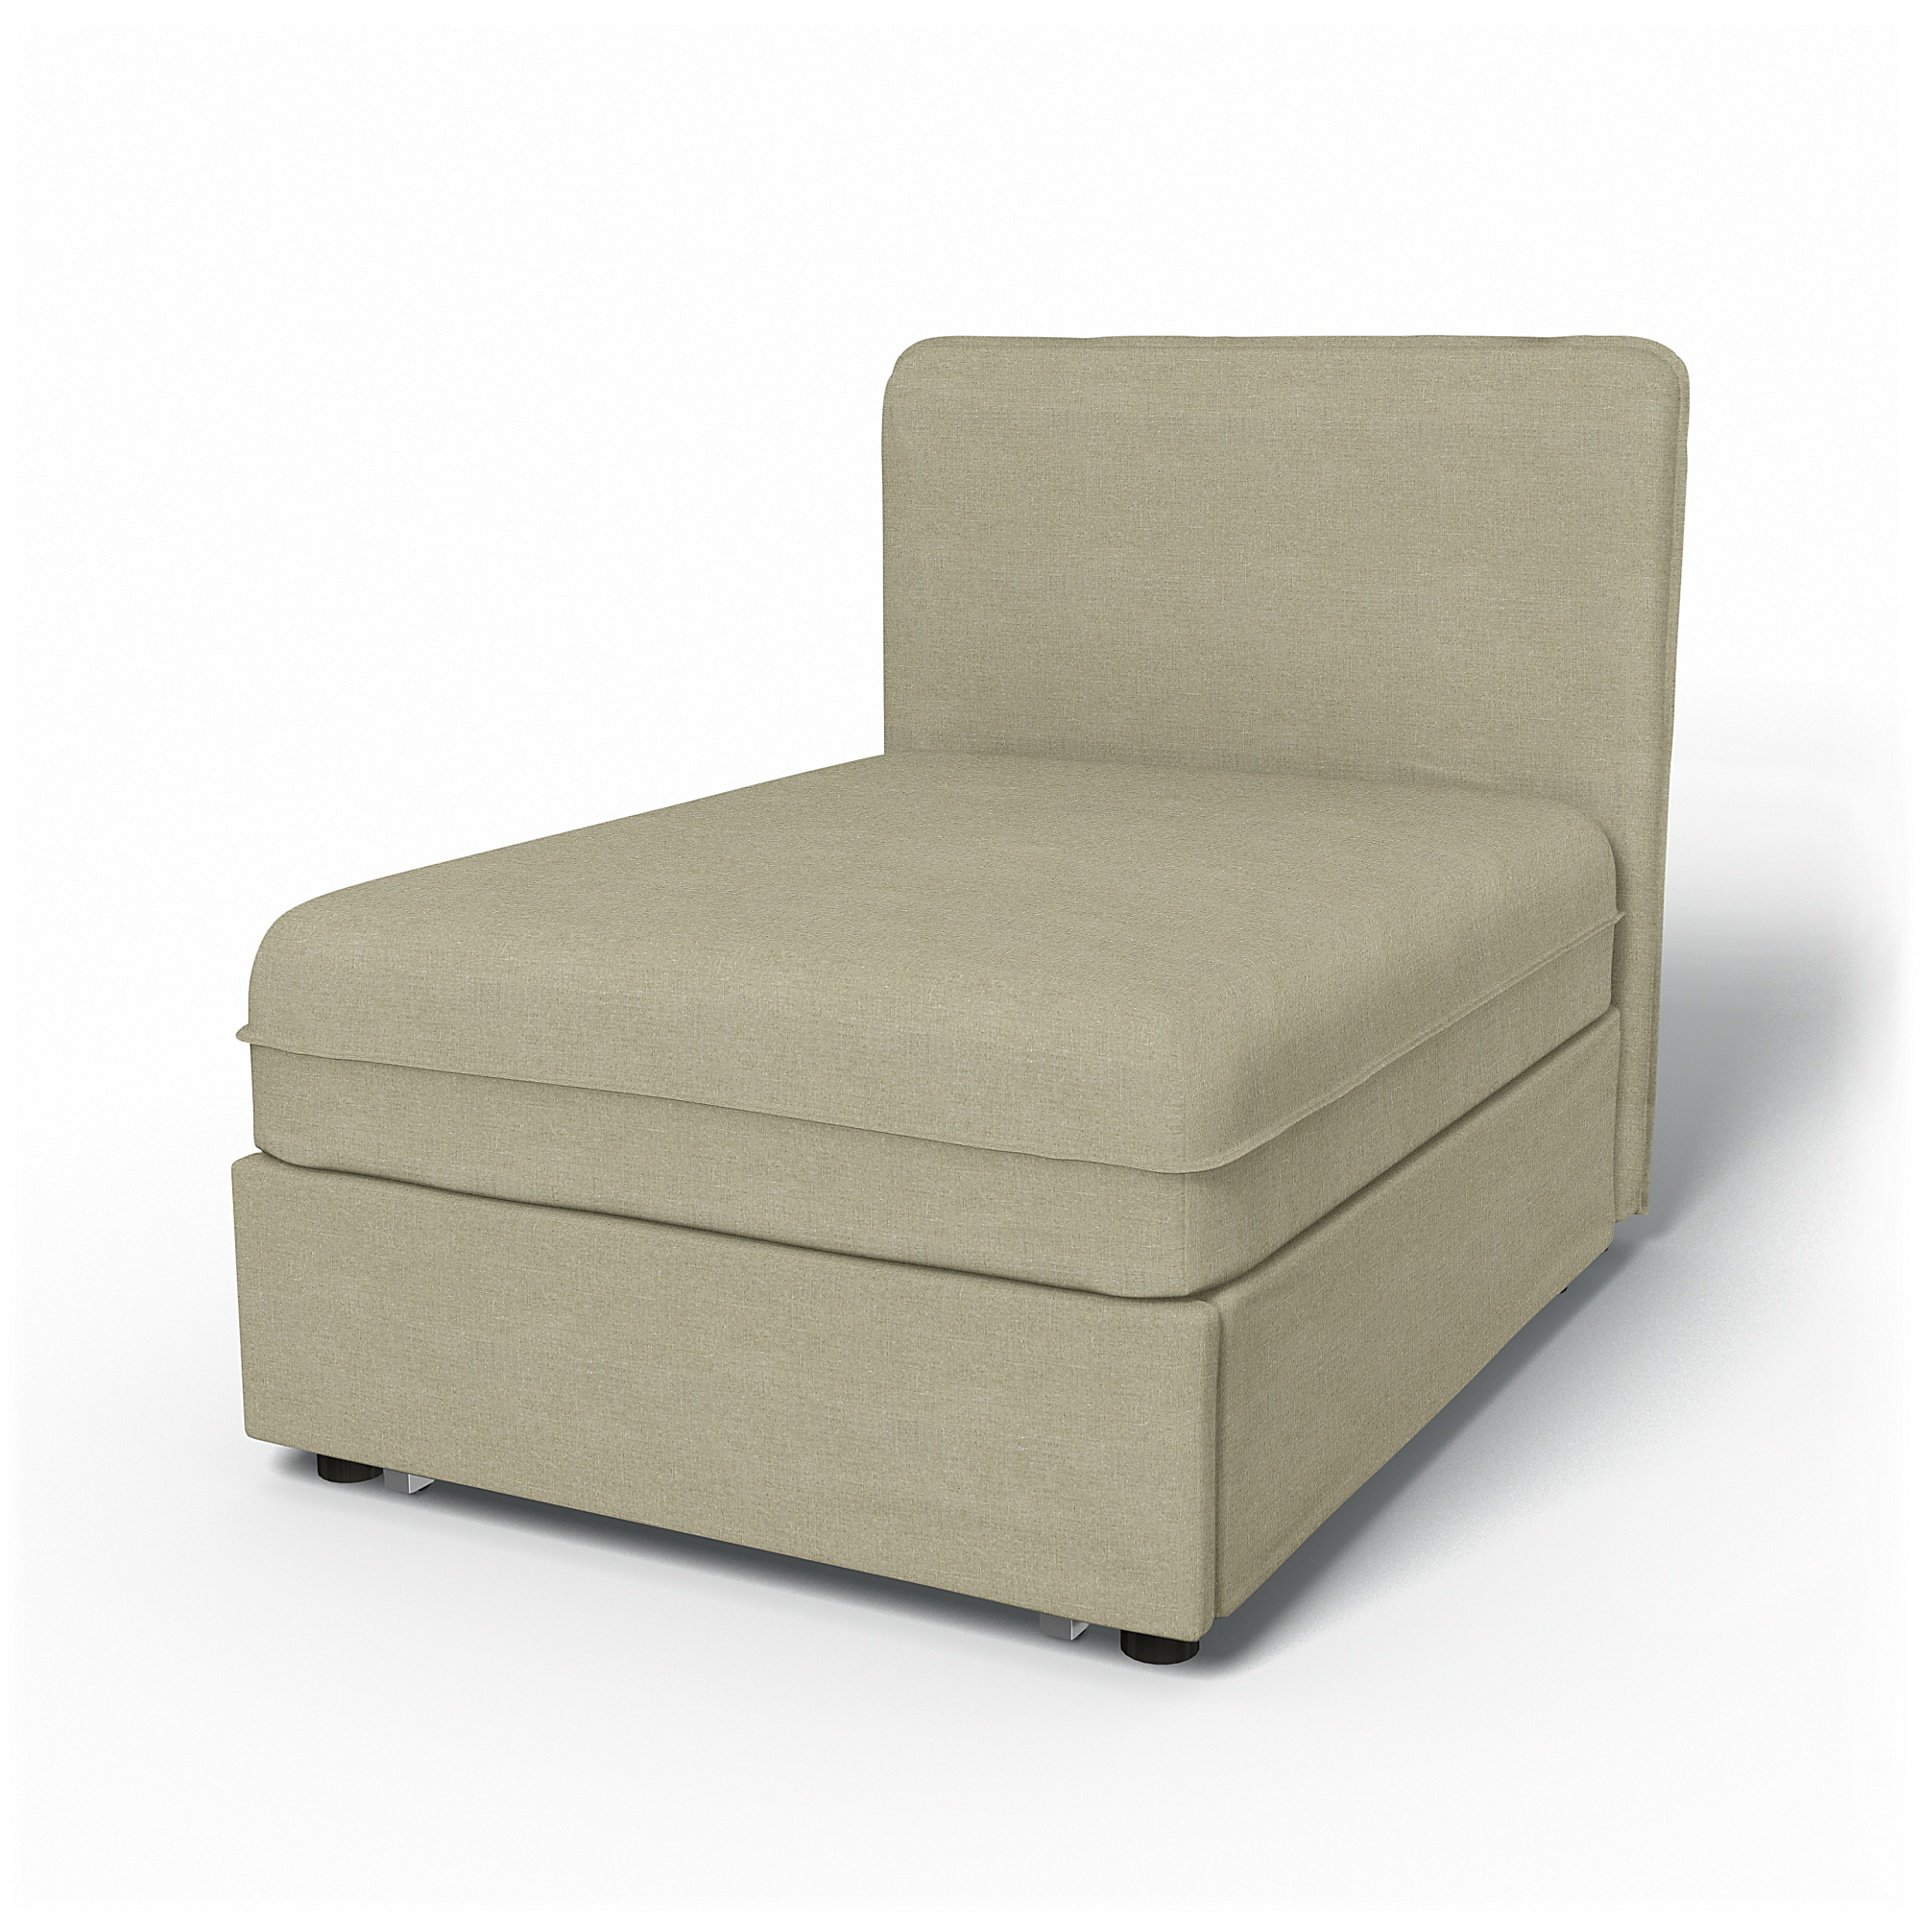 IKEA - Vallentuna Seat Module with Low Back Sofa Bed Cover 80x100 cm 32x39in, Pebble, Linen - Bemz